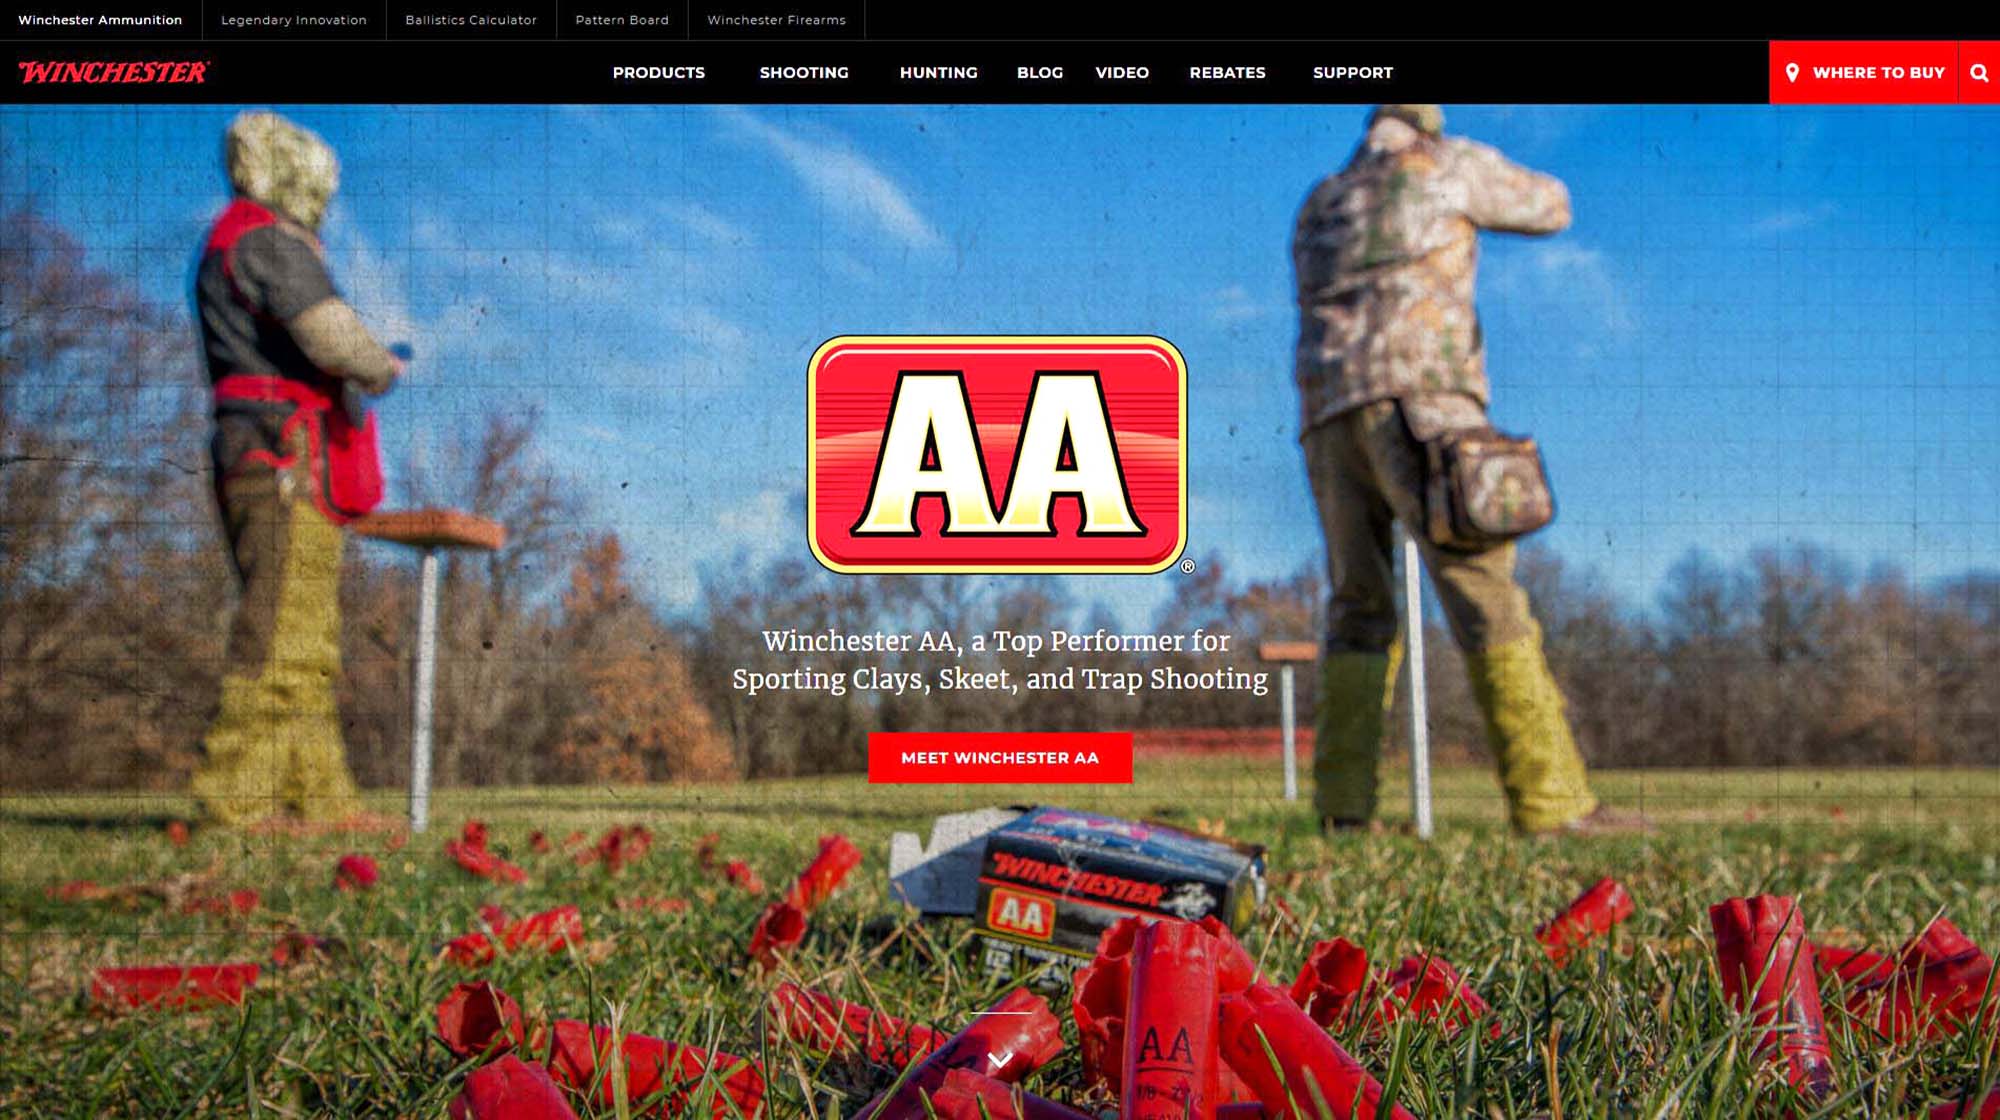 Cordelia profundidad Hueso New Winchester Ammunition Web Site and Enhanced Ballistics Calculator |  GUNSweek.com